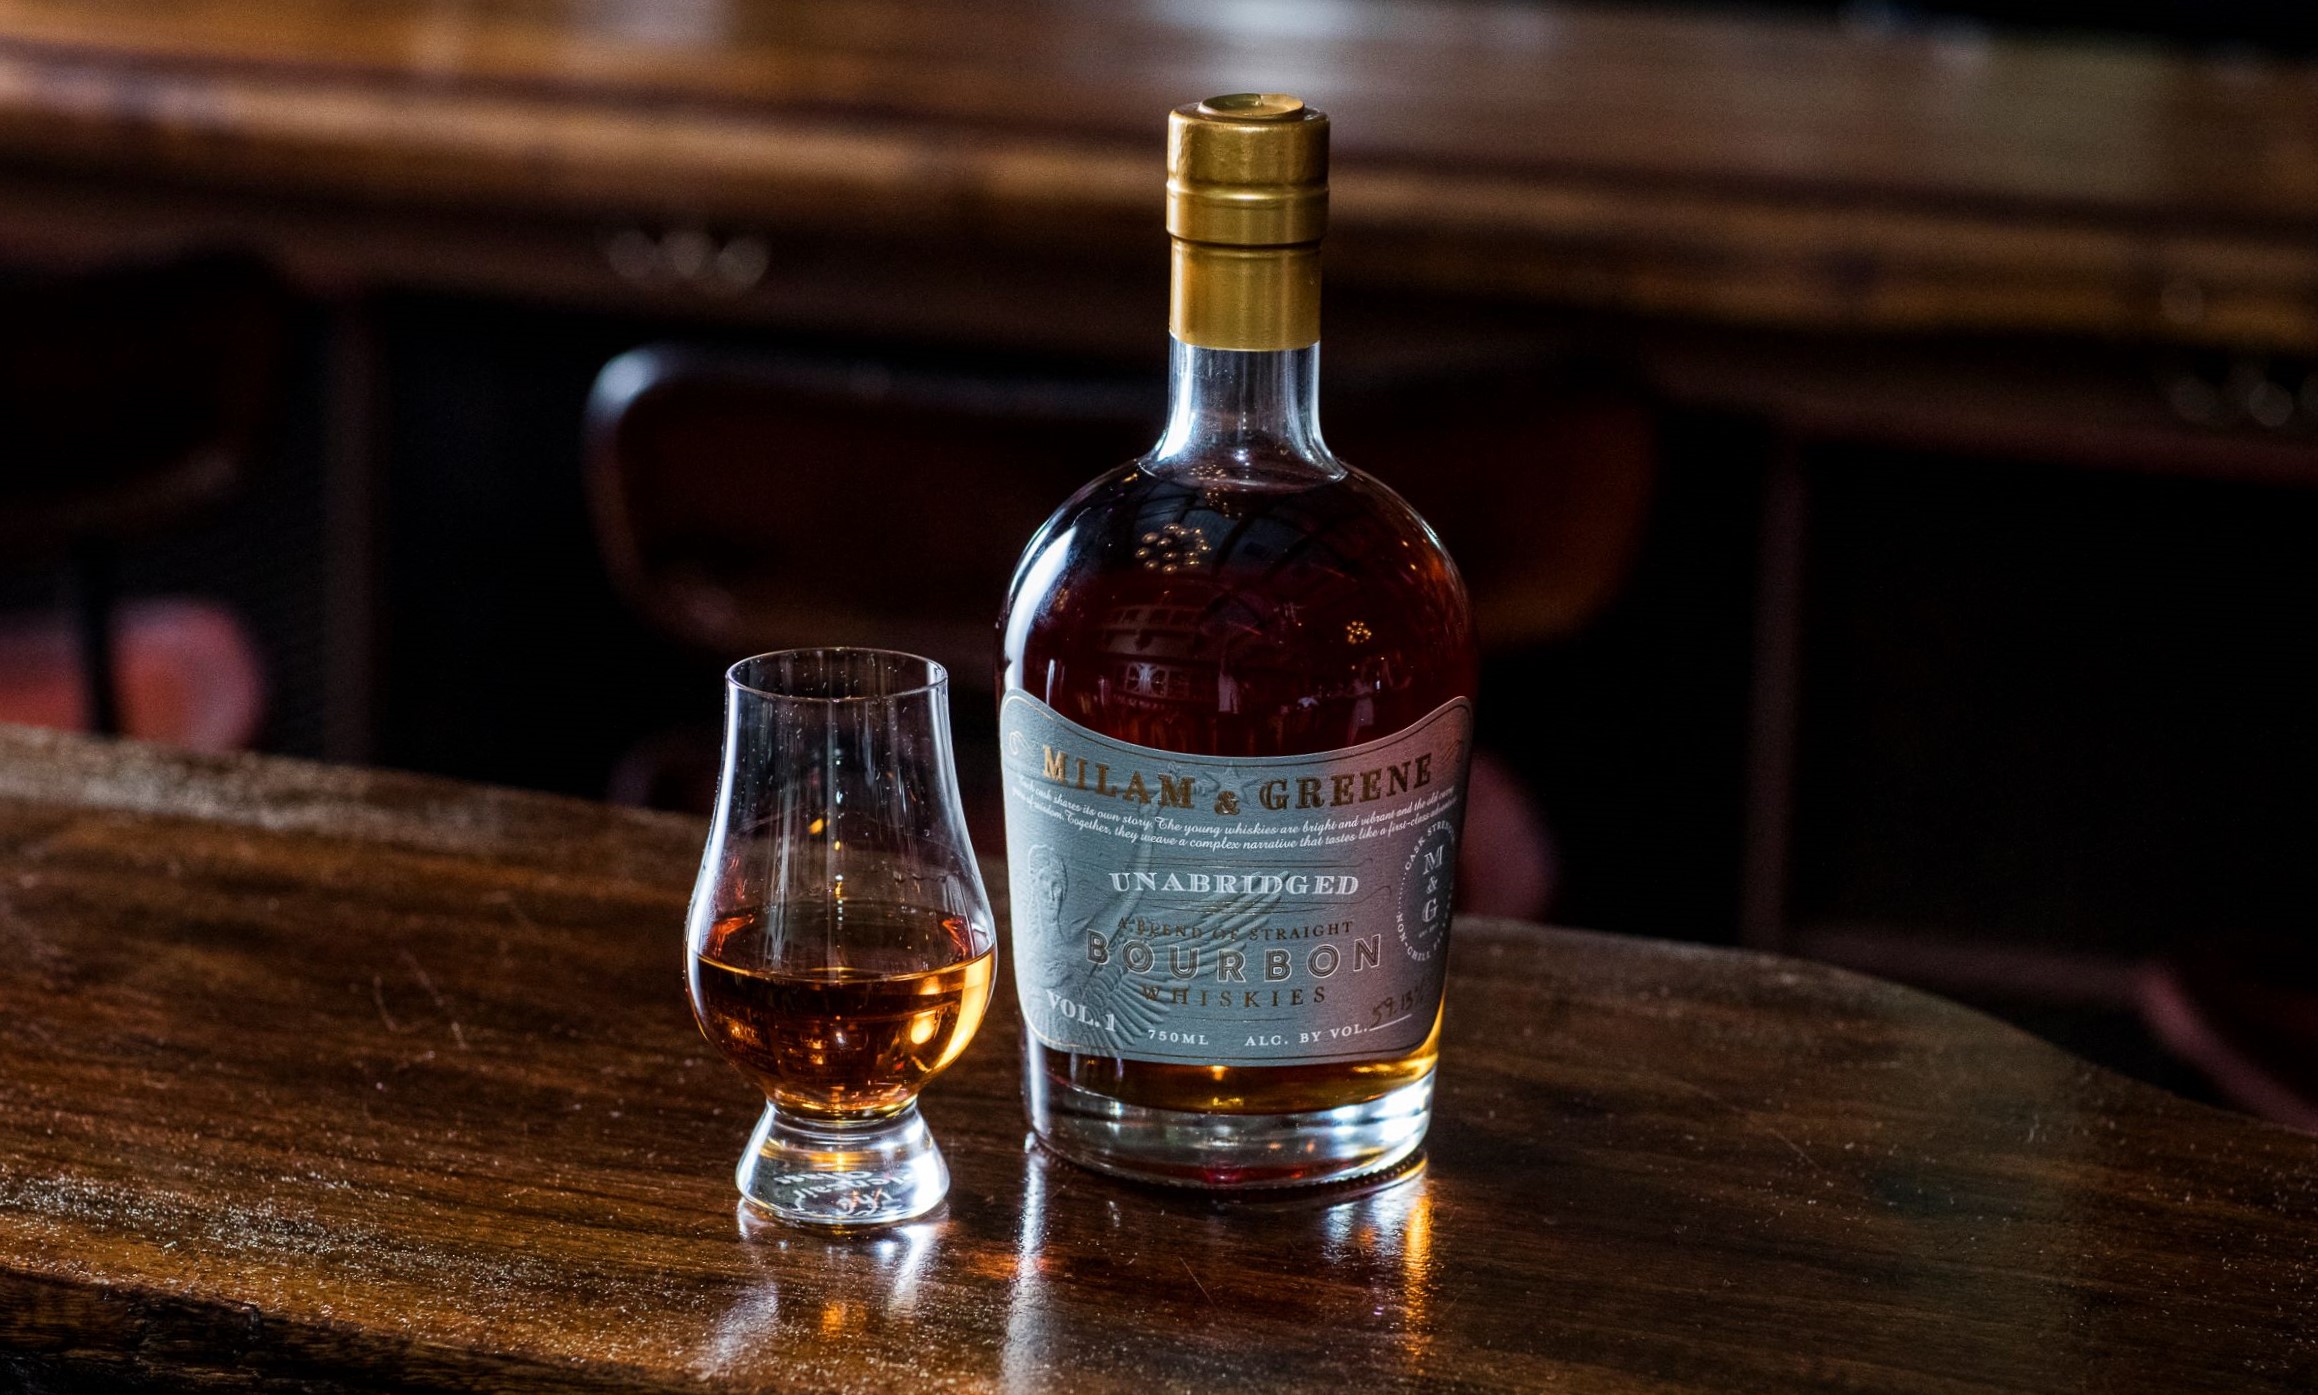 Milam & Greene Releases Unabridged Volume 1 Bourbon Whiskey